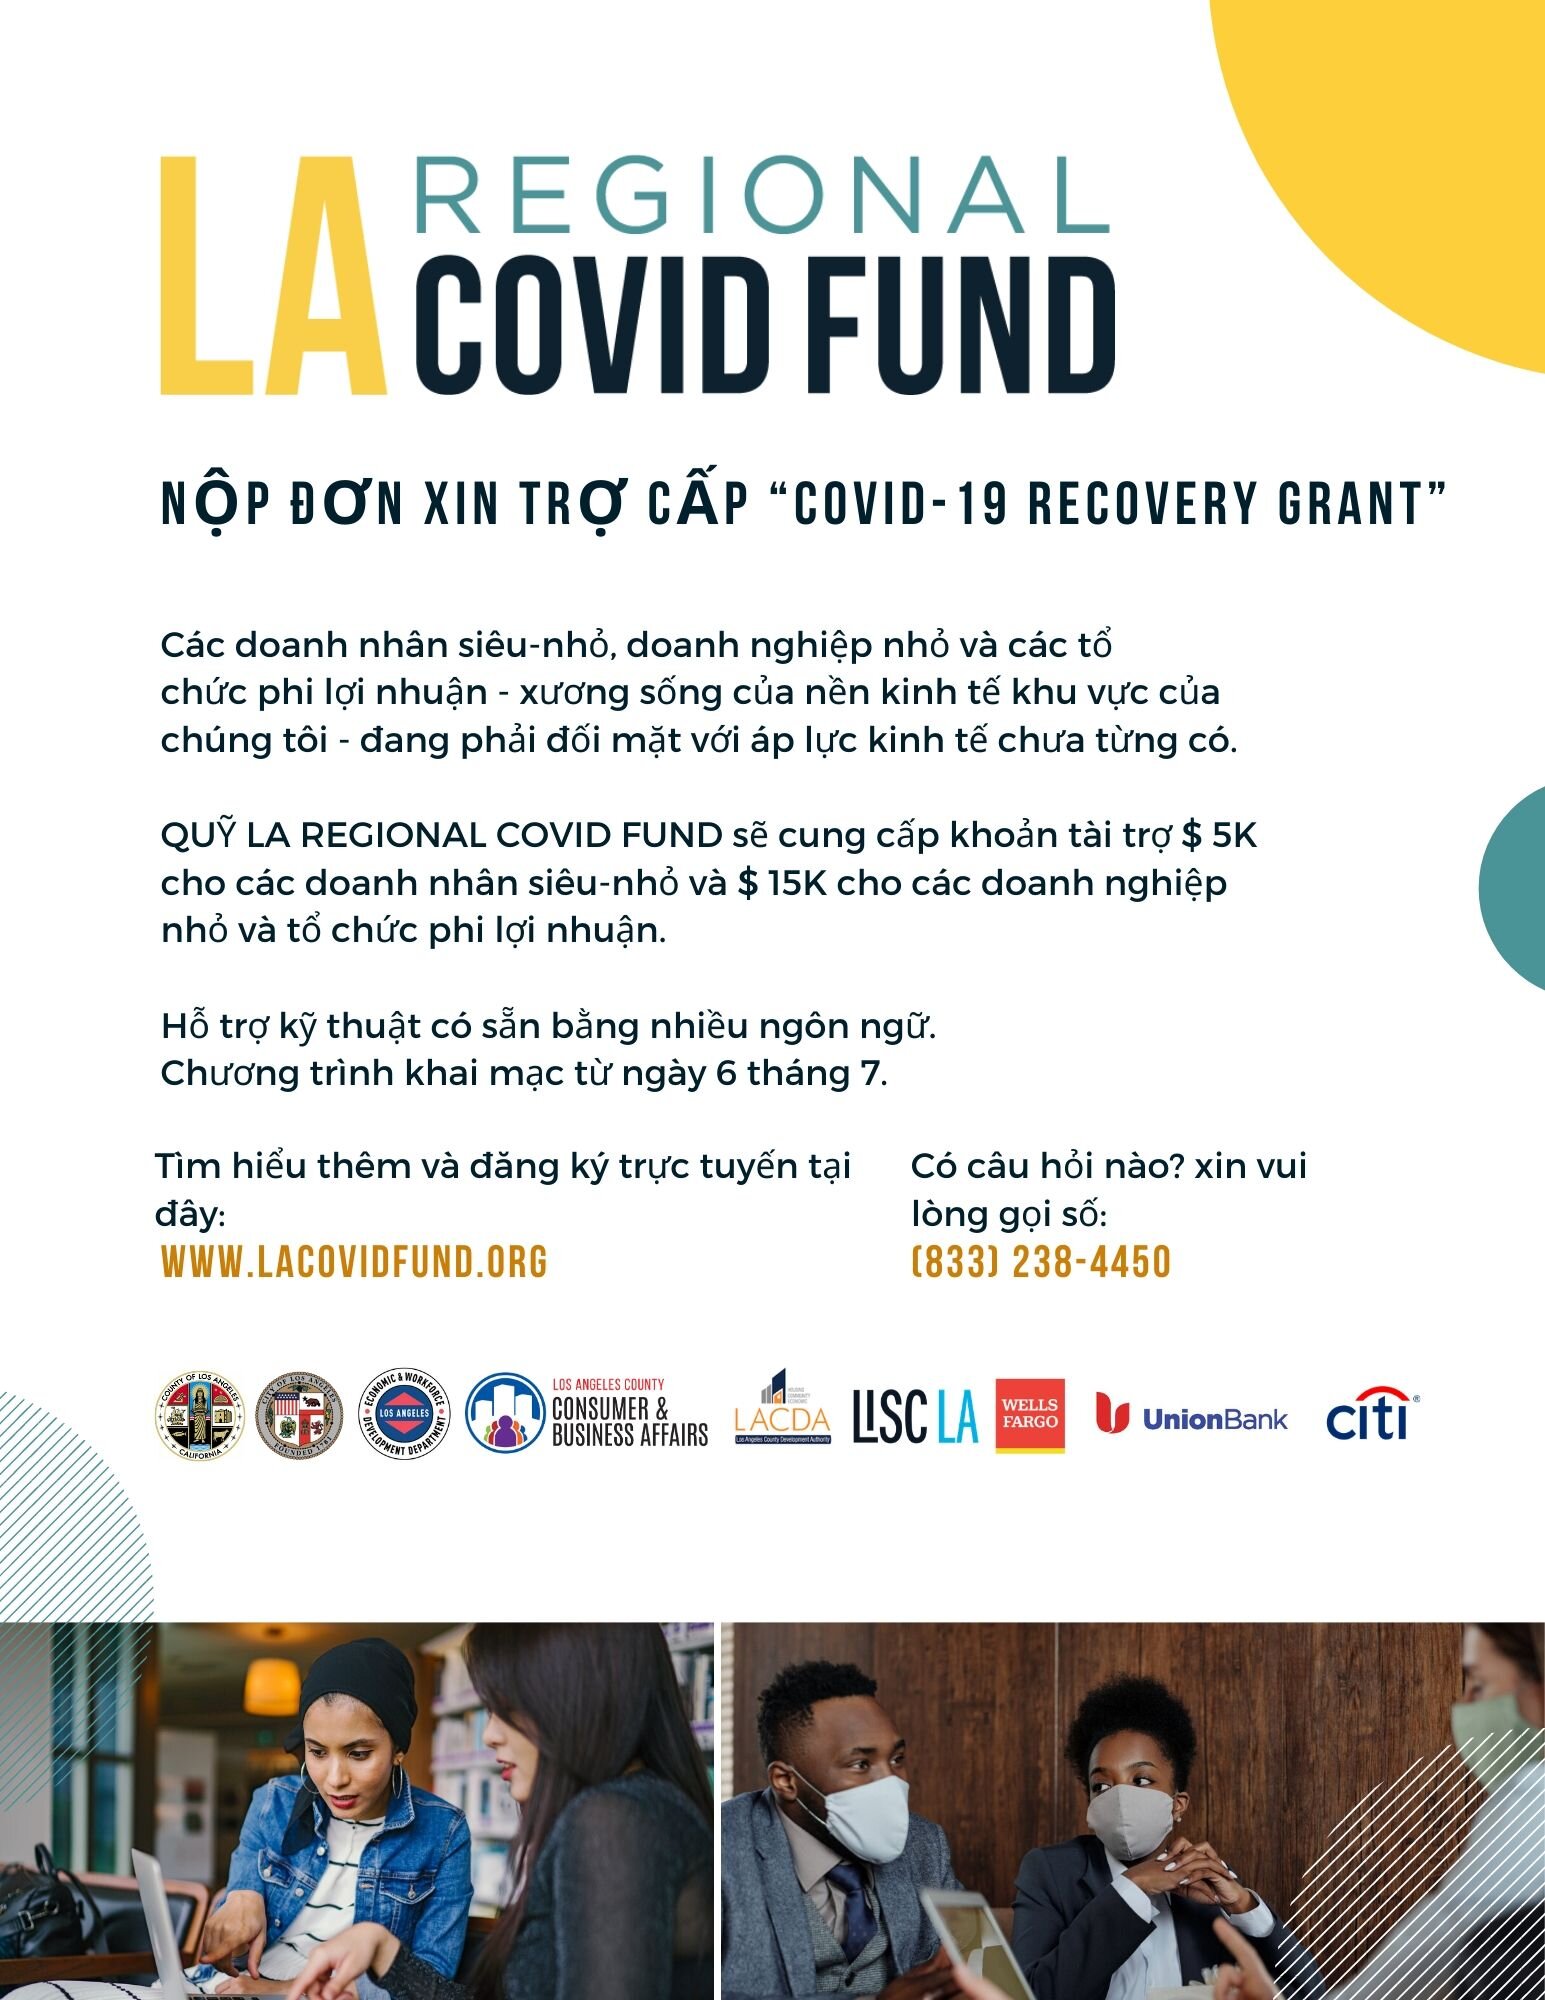 Vietnamese_LA COVID-19 Regional Relief Fund -flyer.jpg